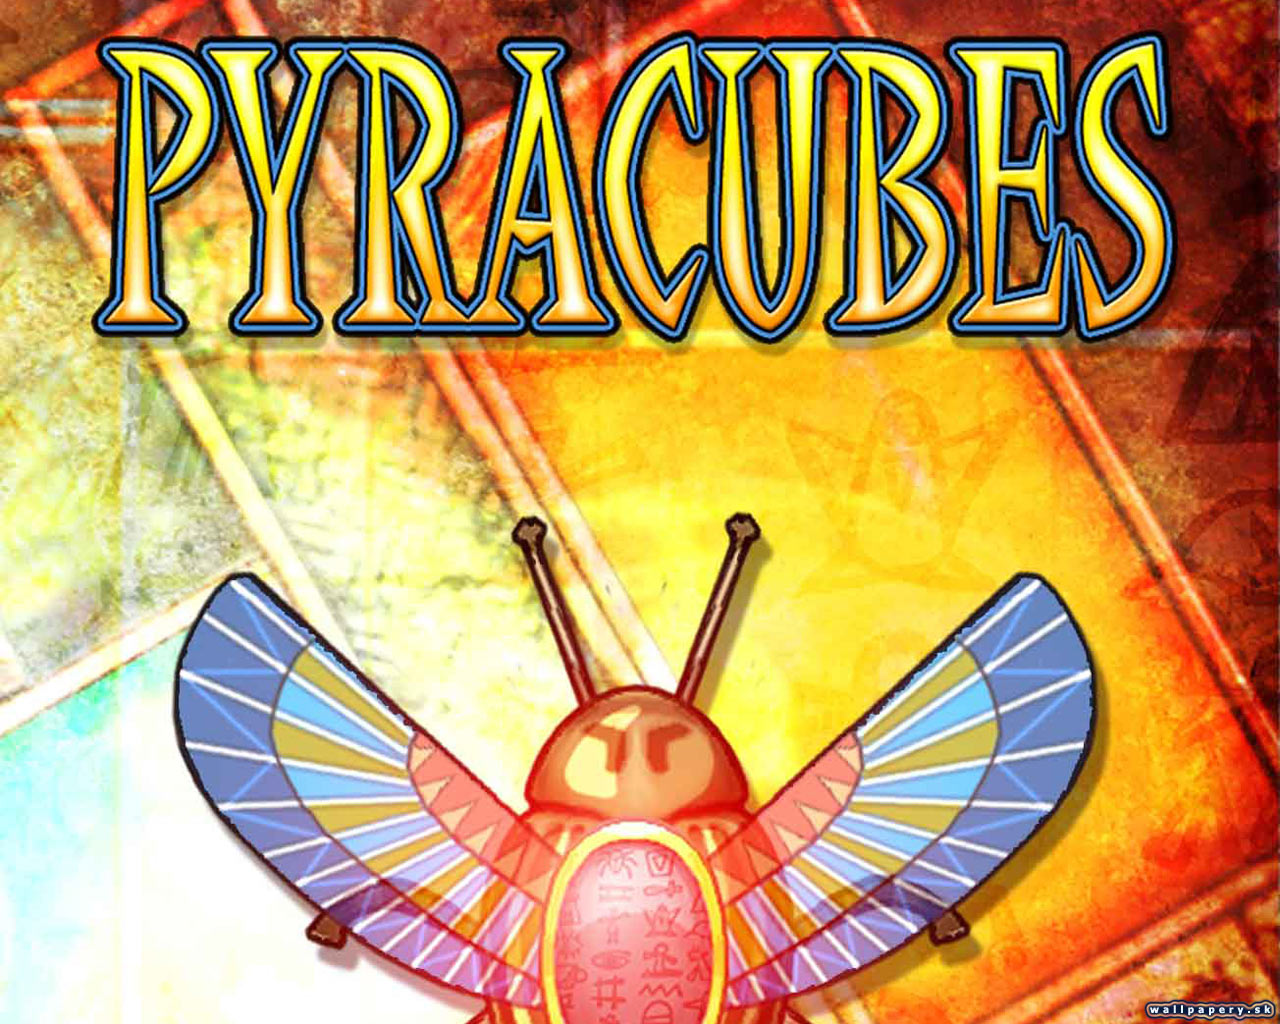 PyraCubes - wallpaper 1